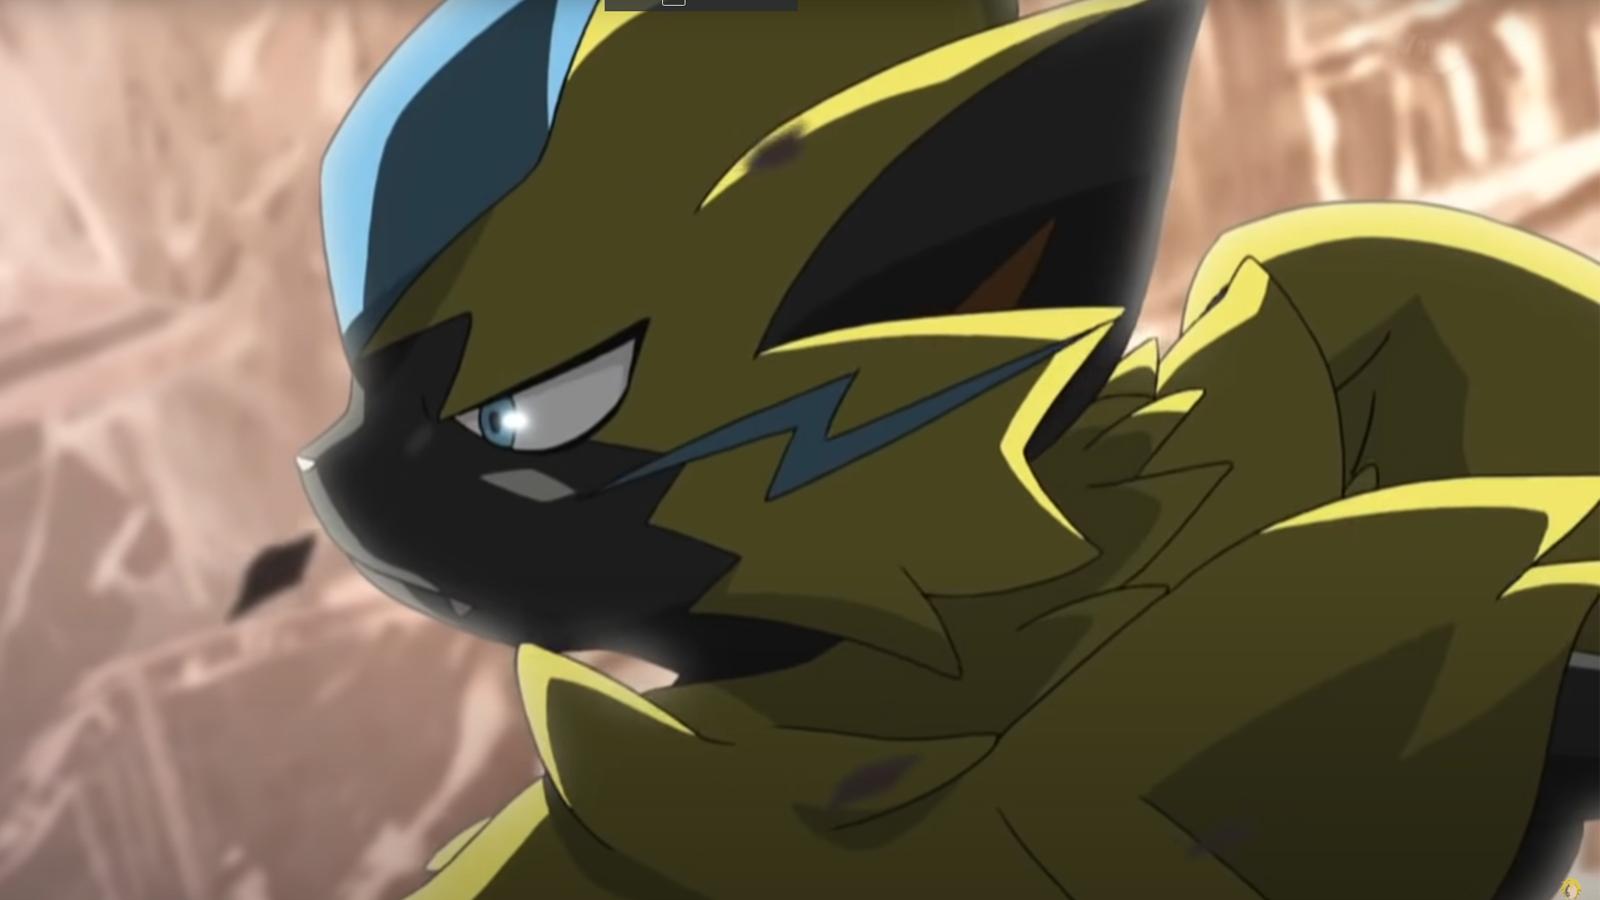 Zeraora fight with Ash Ketchum in Pokemon